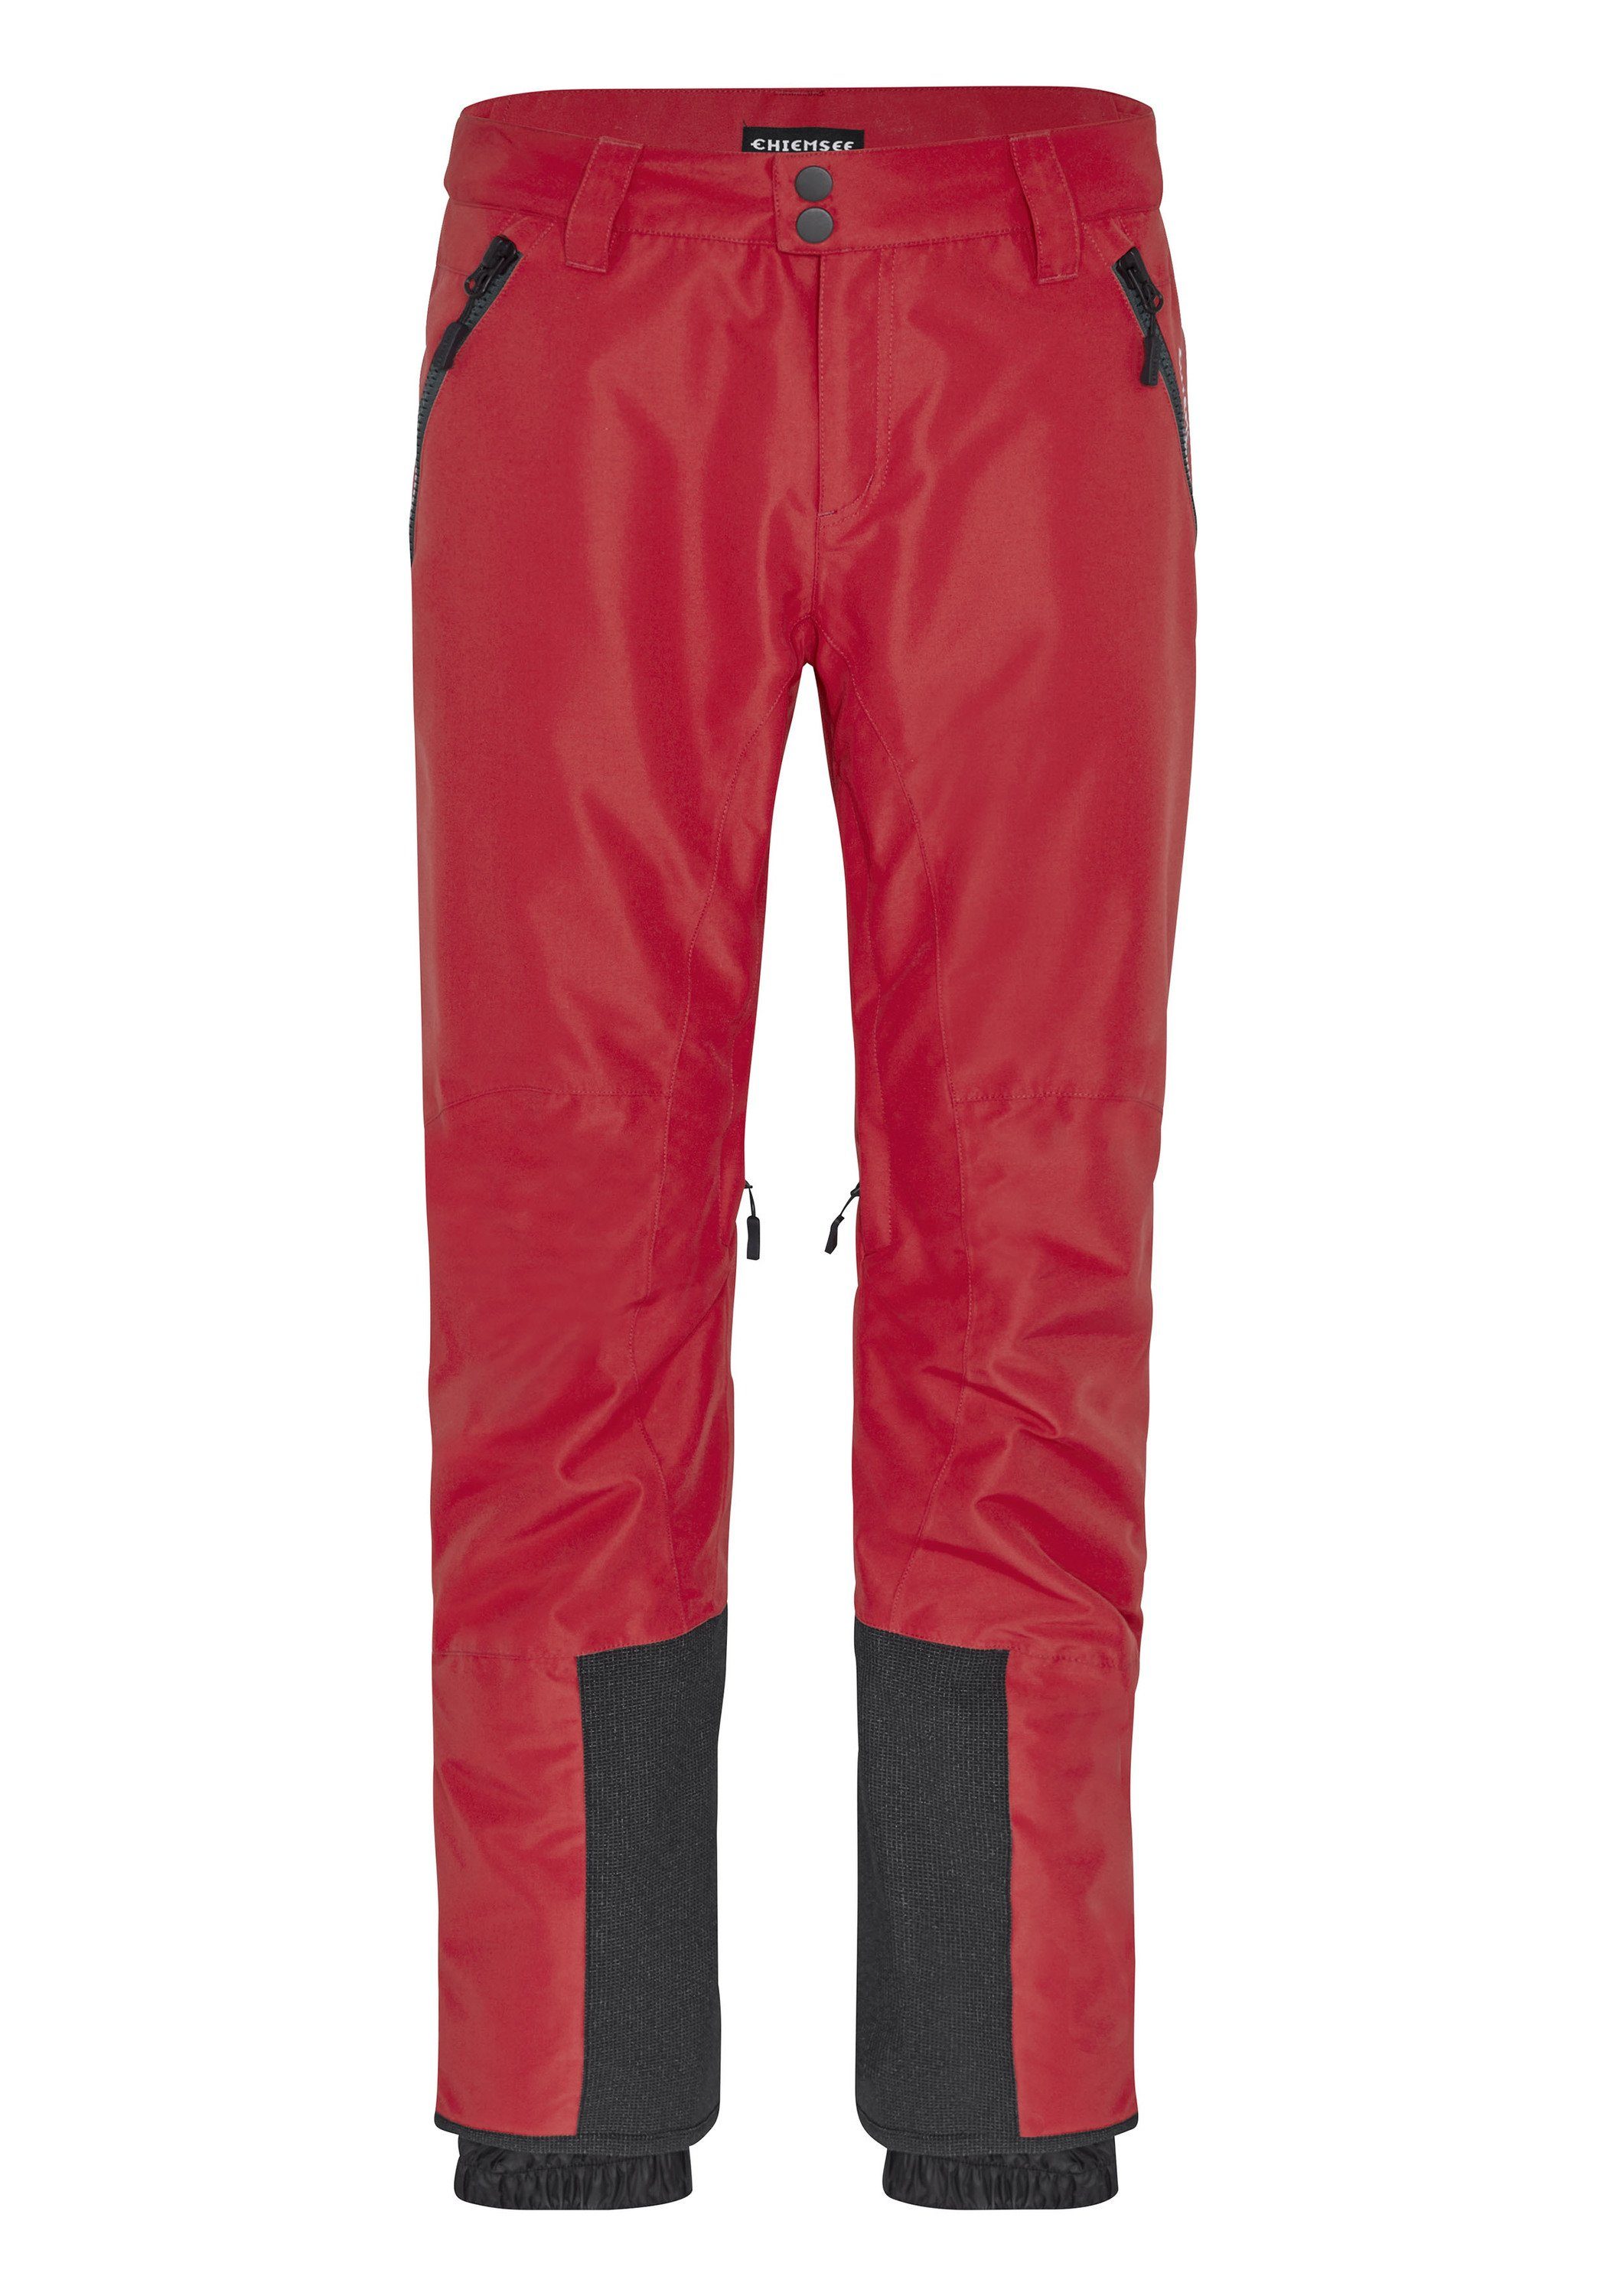 Chiemsee Sporthose Skihose mit Schneefang 1 dunkel rot